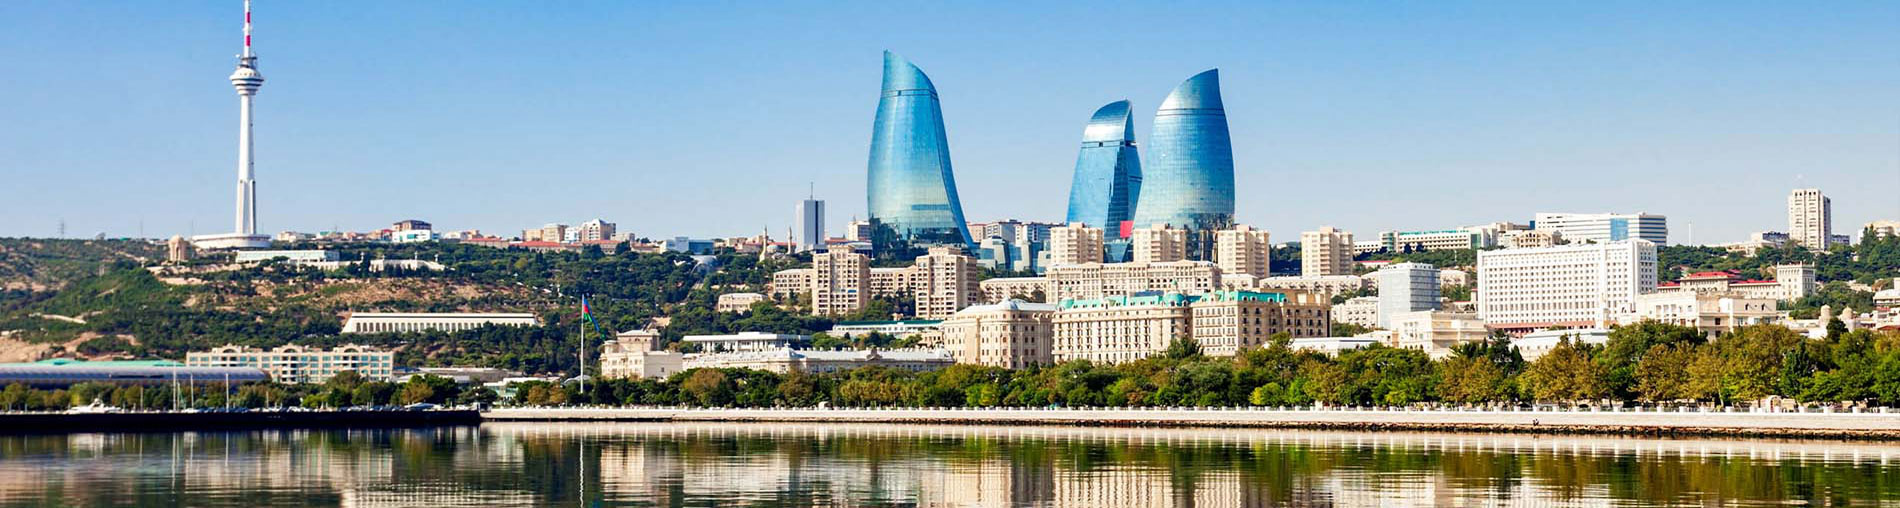 Baku, Azerbaijan Tour Package From India